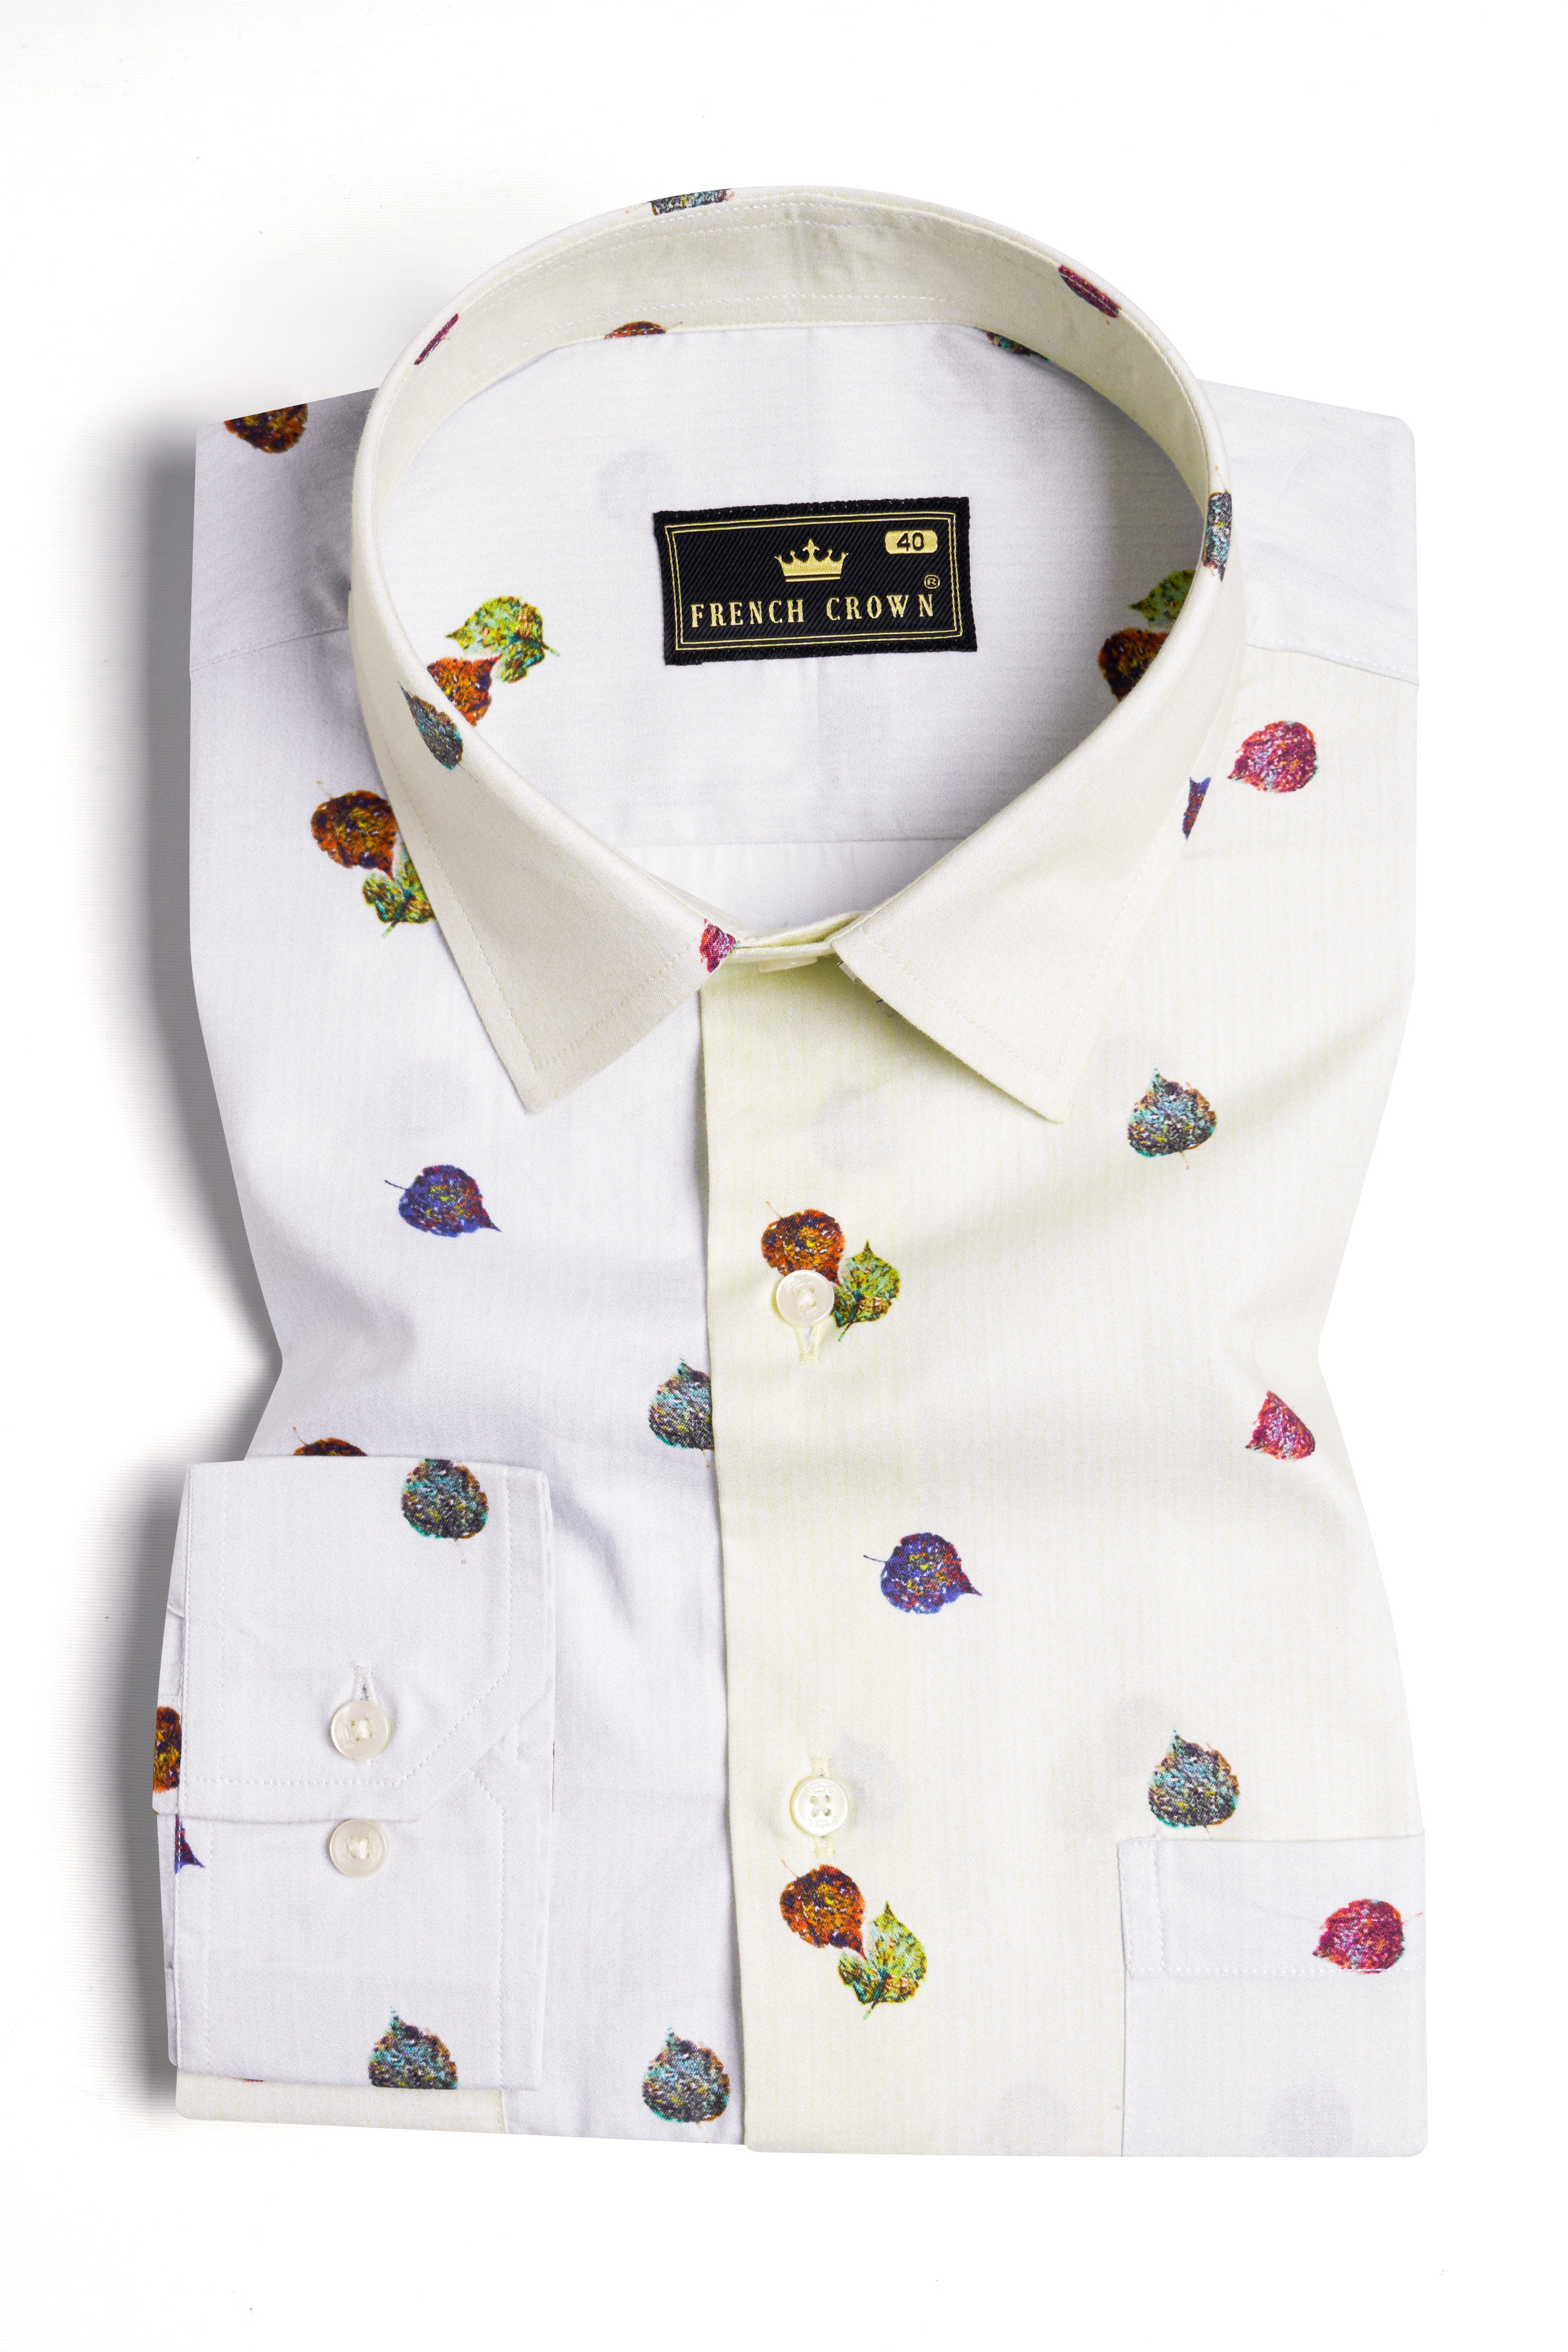 Half Bright White with Half Hampton Beige Leaves Printed Super Soft Premium Cotton Designer Shirt